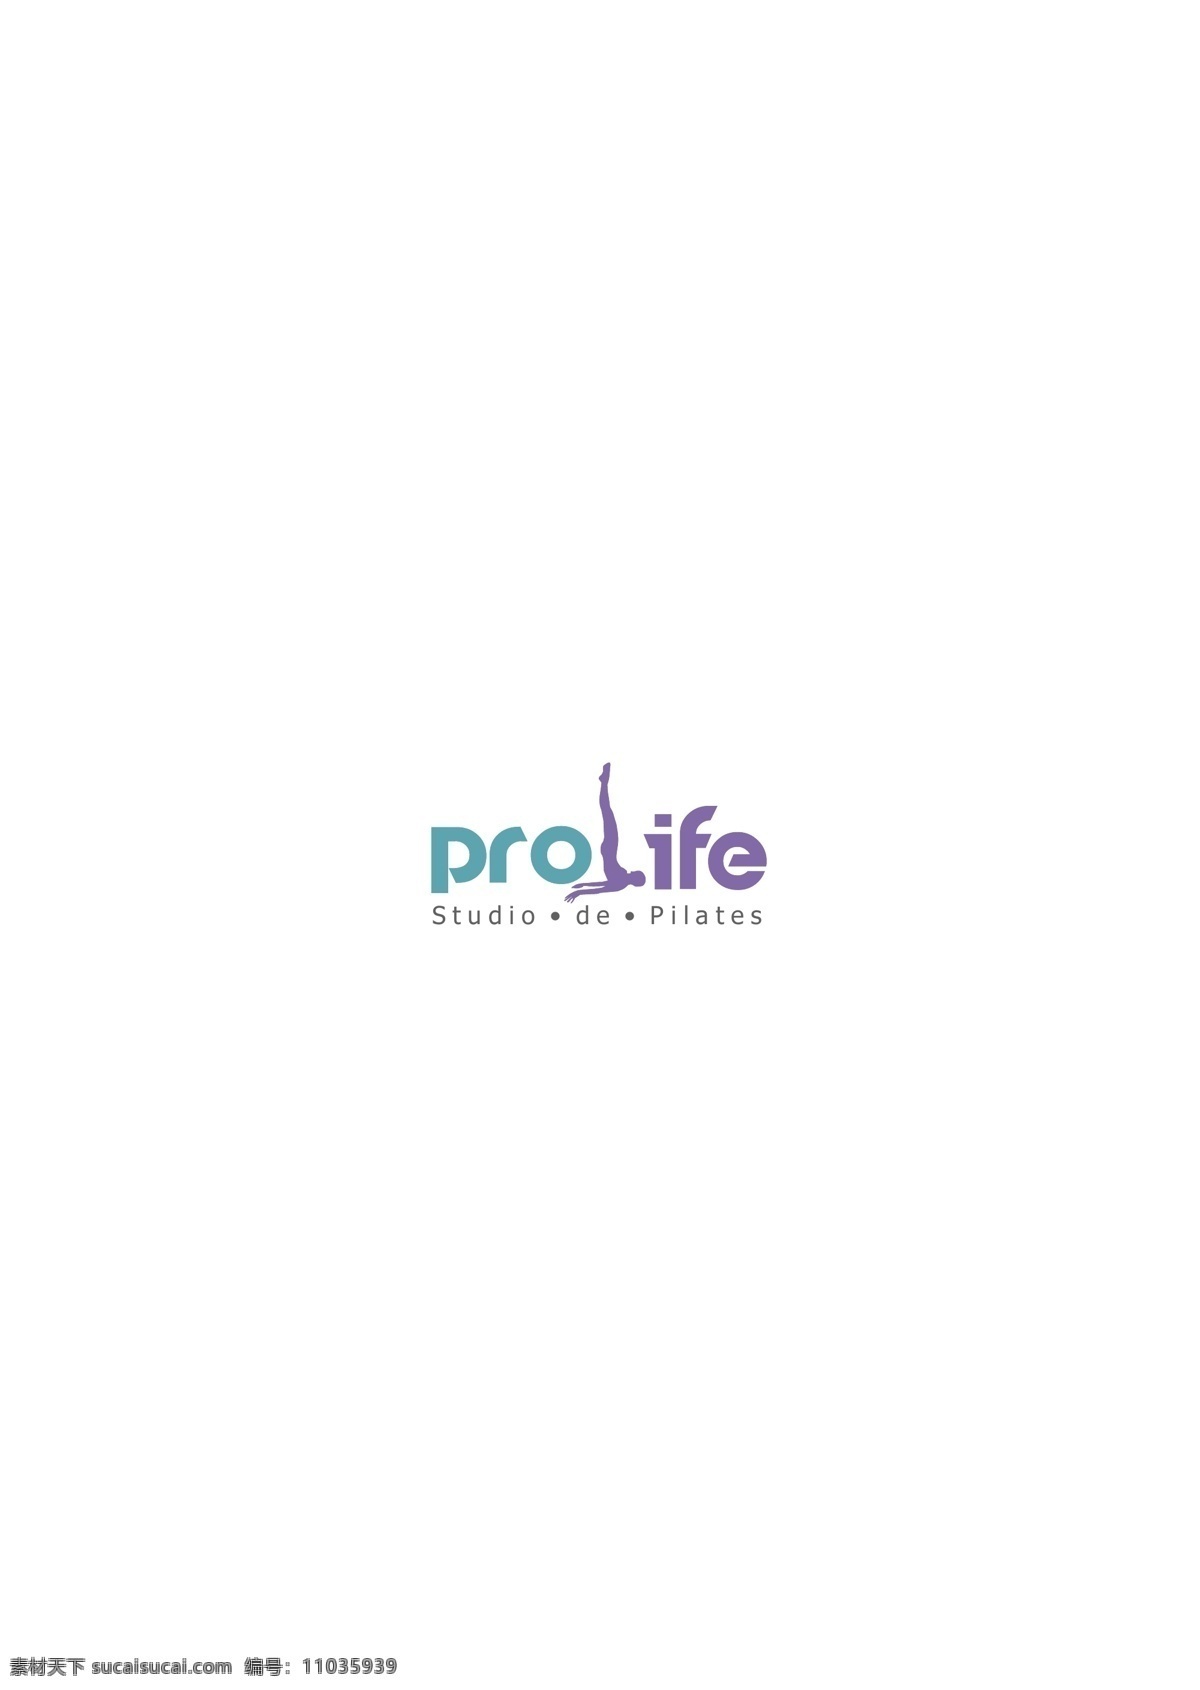 prolife1 logo 设计欣赏 卫生机构 标志设计 欣赏 矢量下载 网页矢量 商业矢量 logo大全 红色